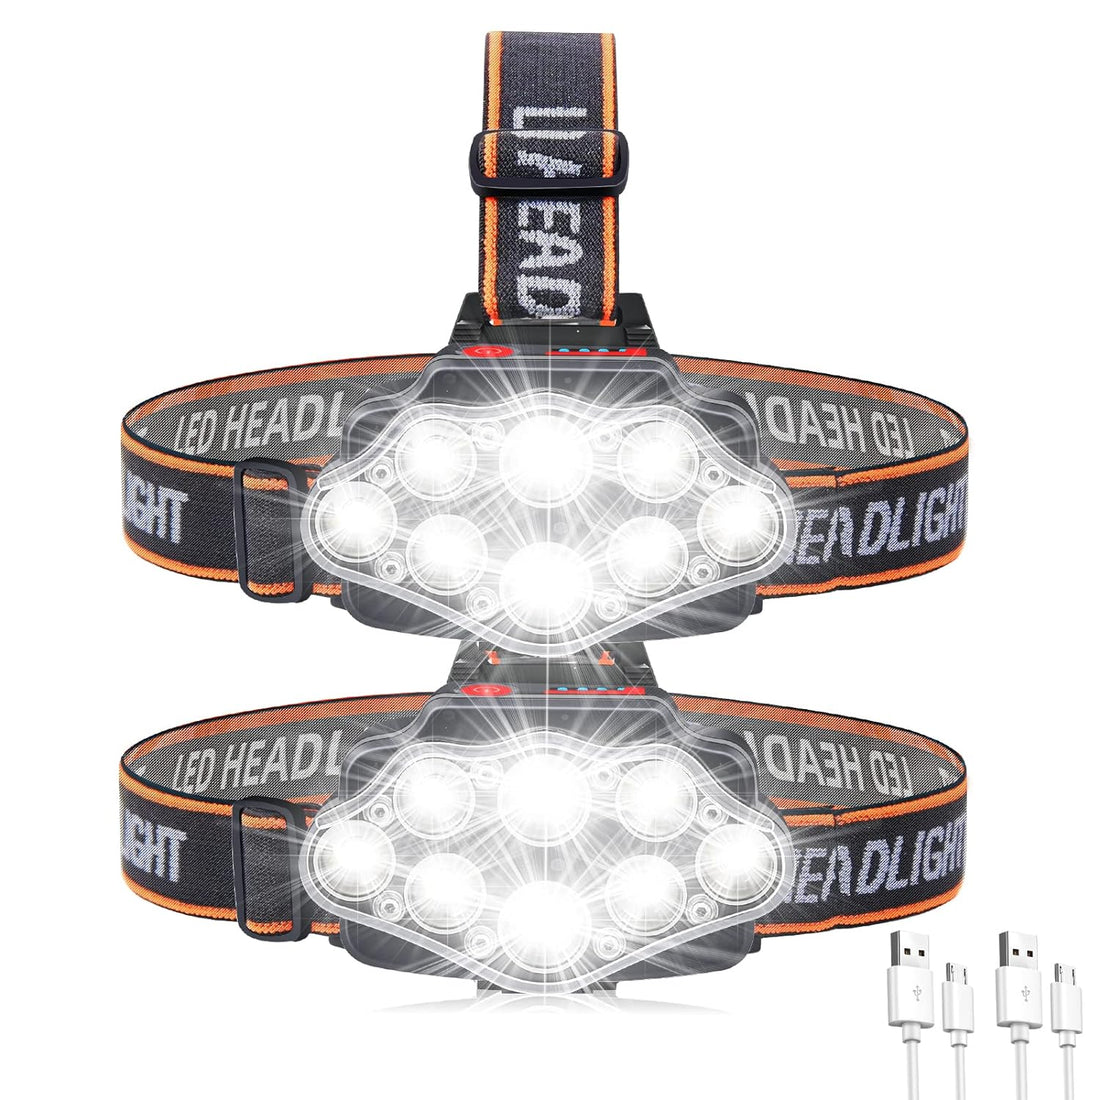 Loqumloi Rechargeable Headlamp, High Lumen Headlamps Super Bright Headlamp Flashlight